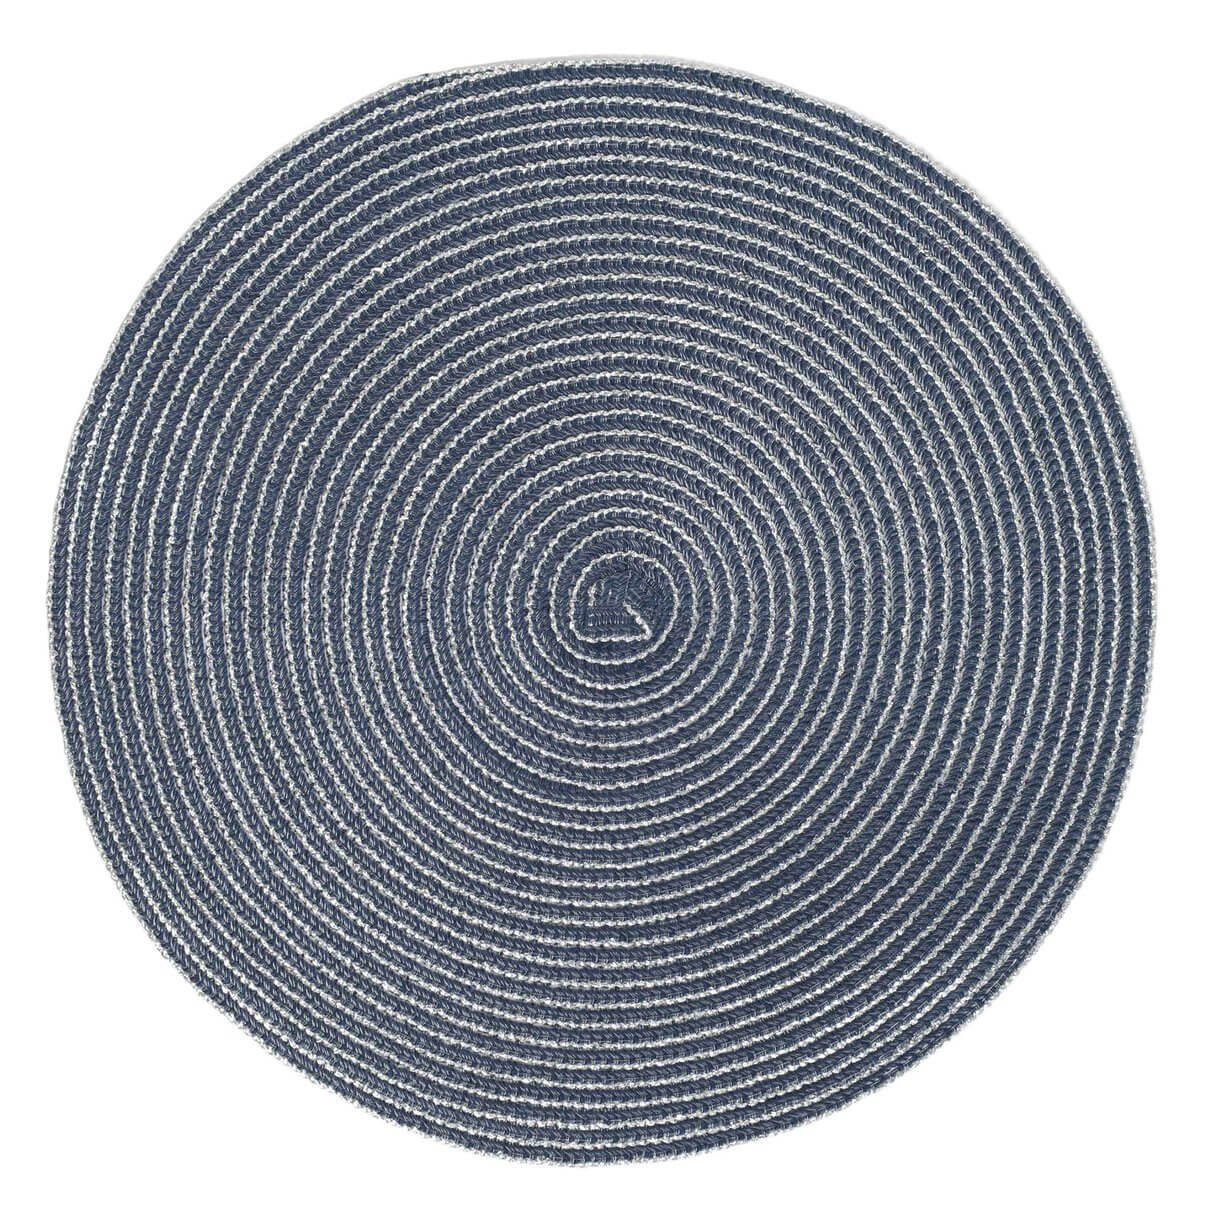 Салфетка под приборы, 38 см, полиэстер, круглая, темно-синяя, Rotary футболка mahagrid star logo ls темно синяя mg2cfmt560a